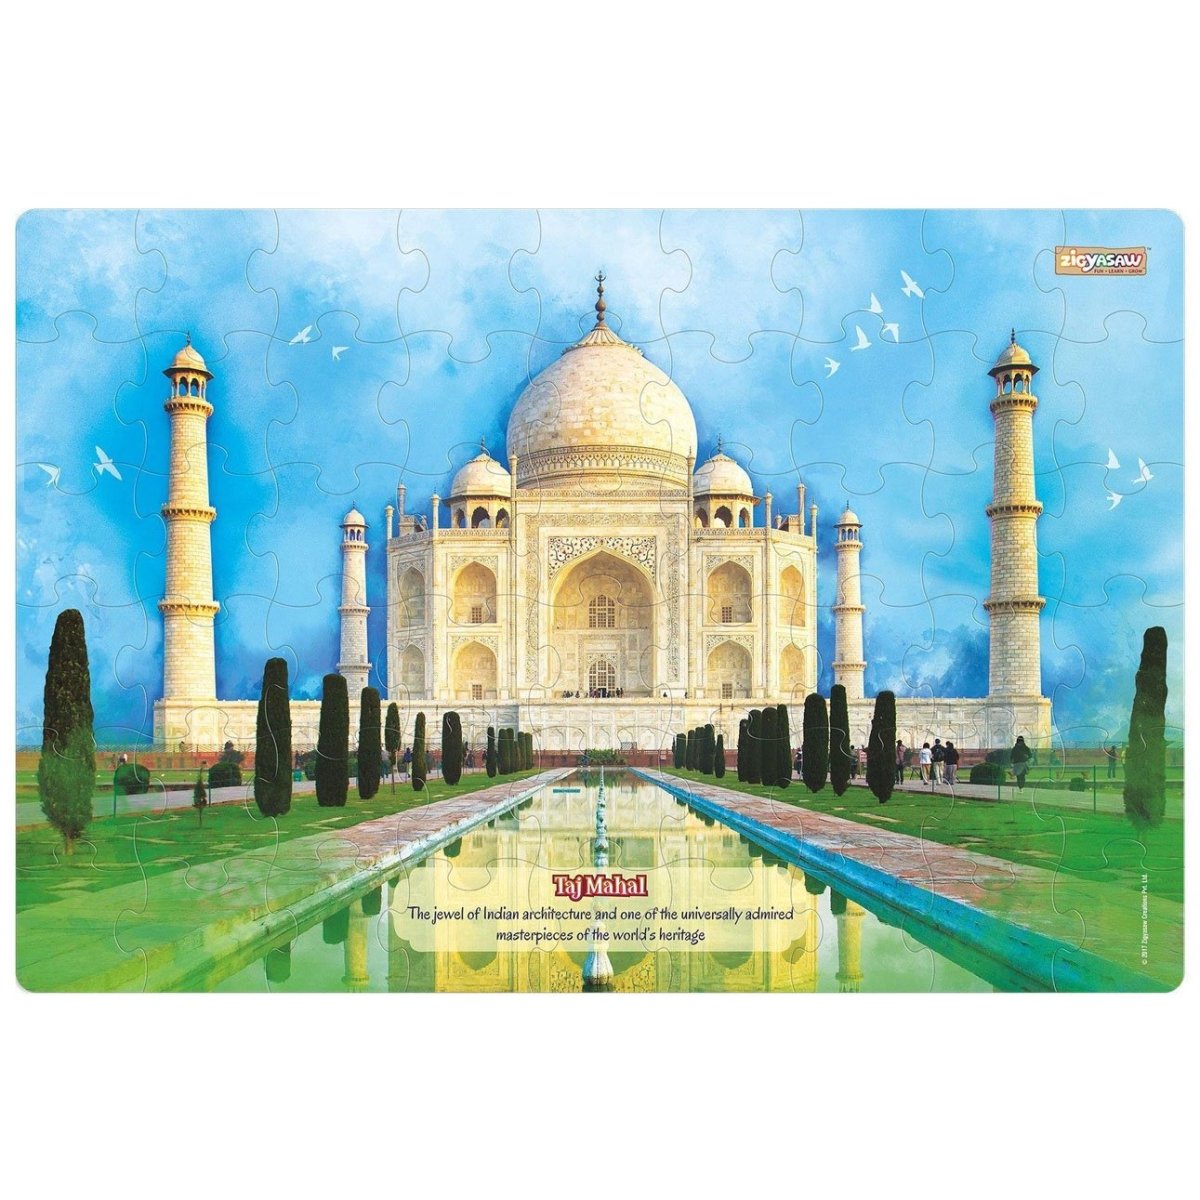 Zigyasaw Taj Mahal Premium Jigsaw Giant Floor Puzzle freeshipping - Zigyasaw